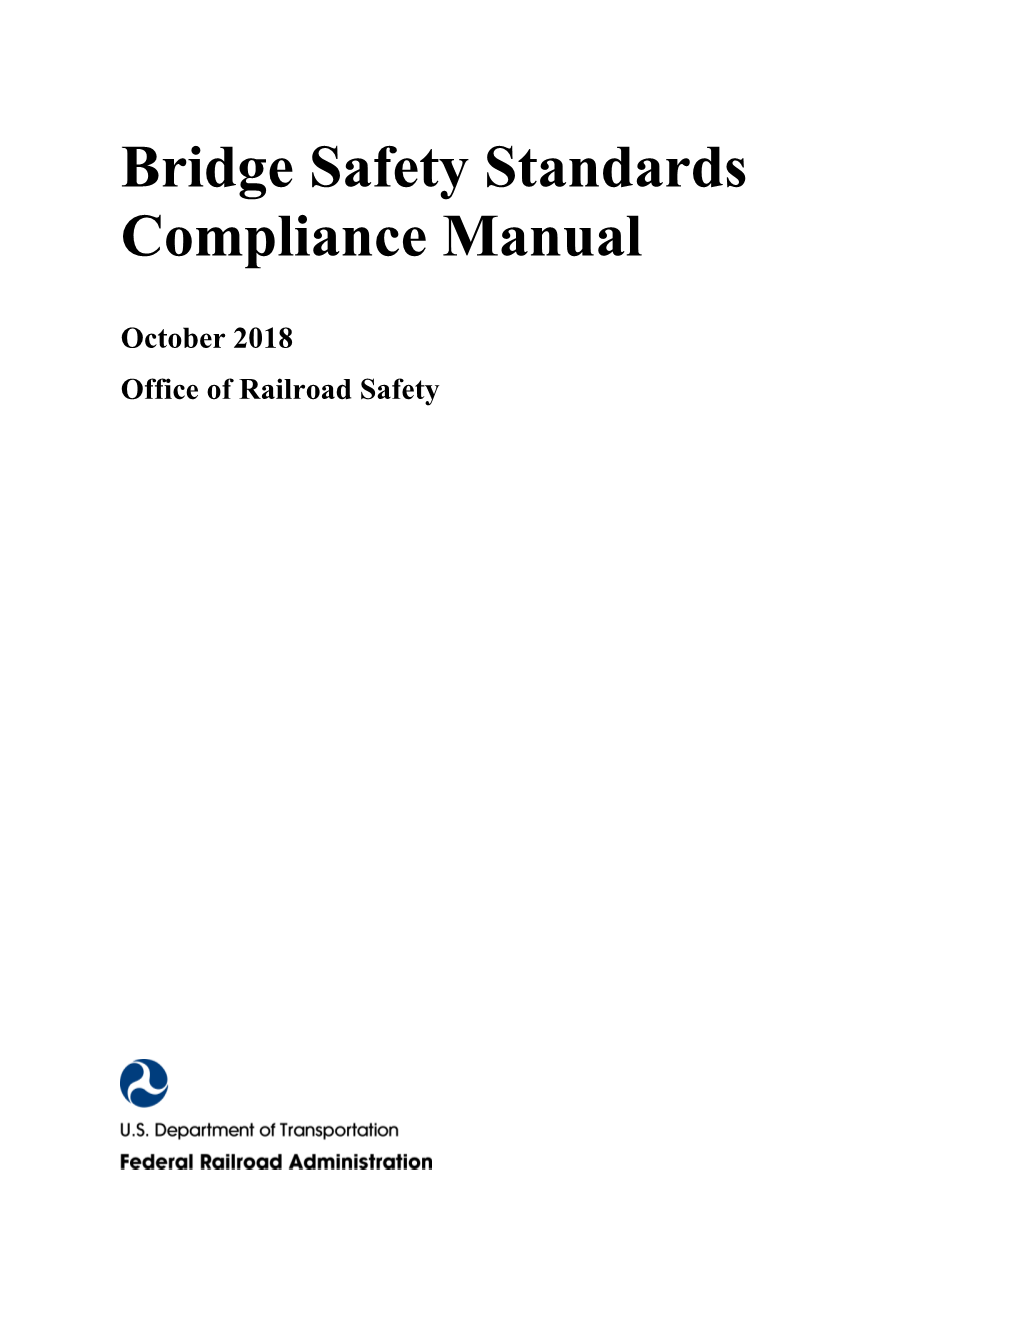 Bridge Safety Standards Compliance Manual Final.Pdf